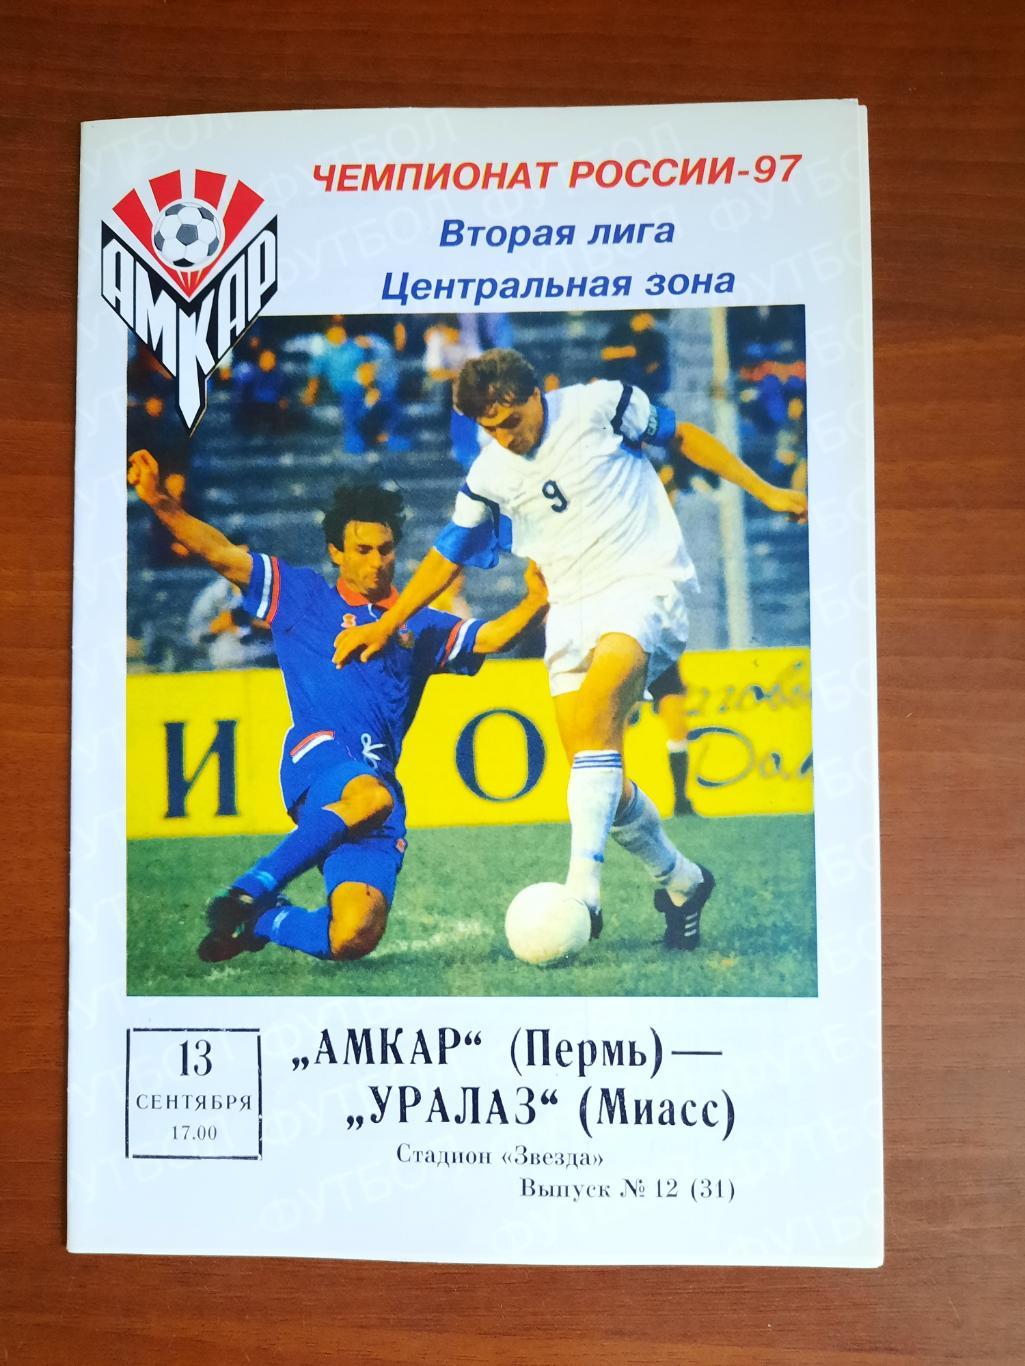 Амкар Пермь Уралаз Миасс 13.09.1997